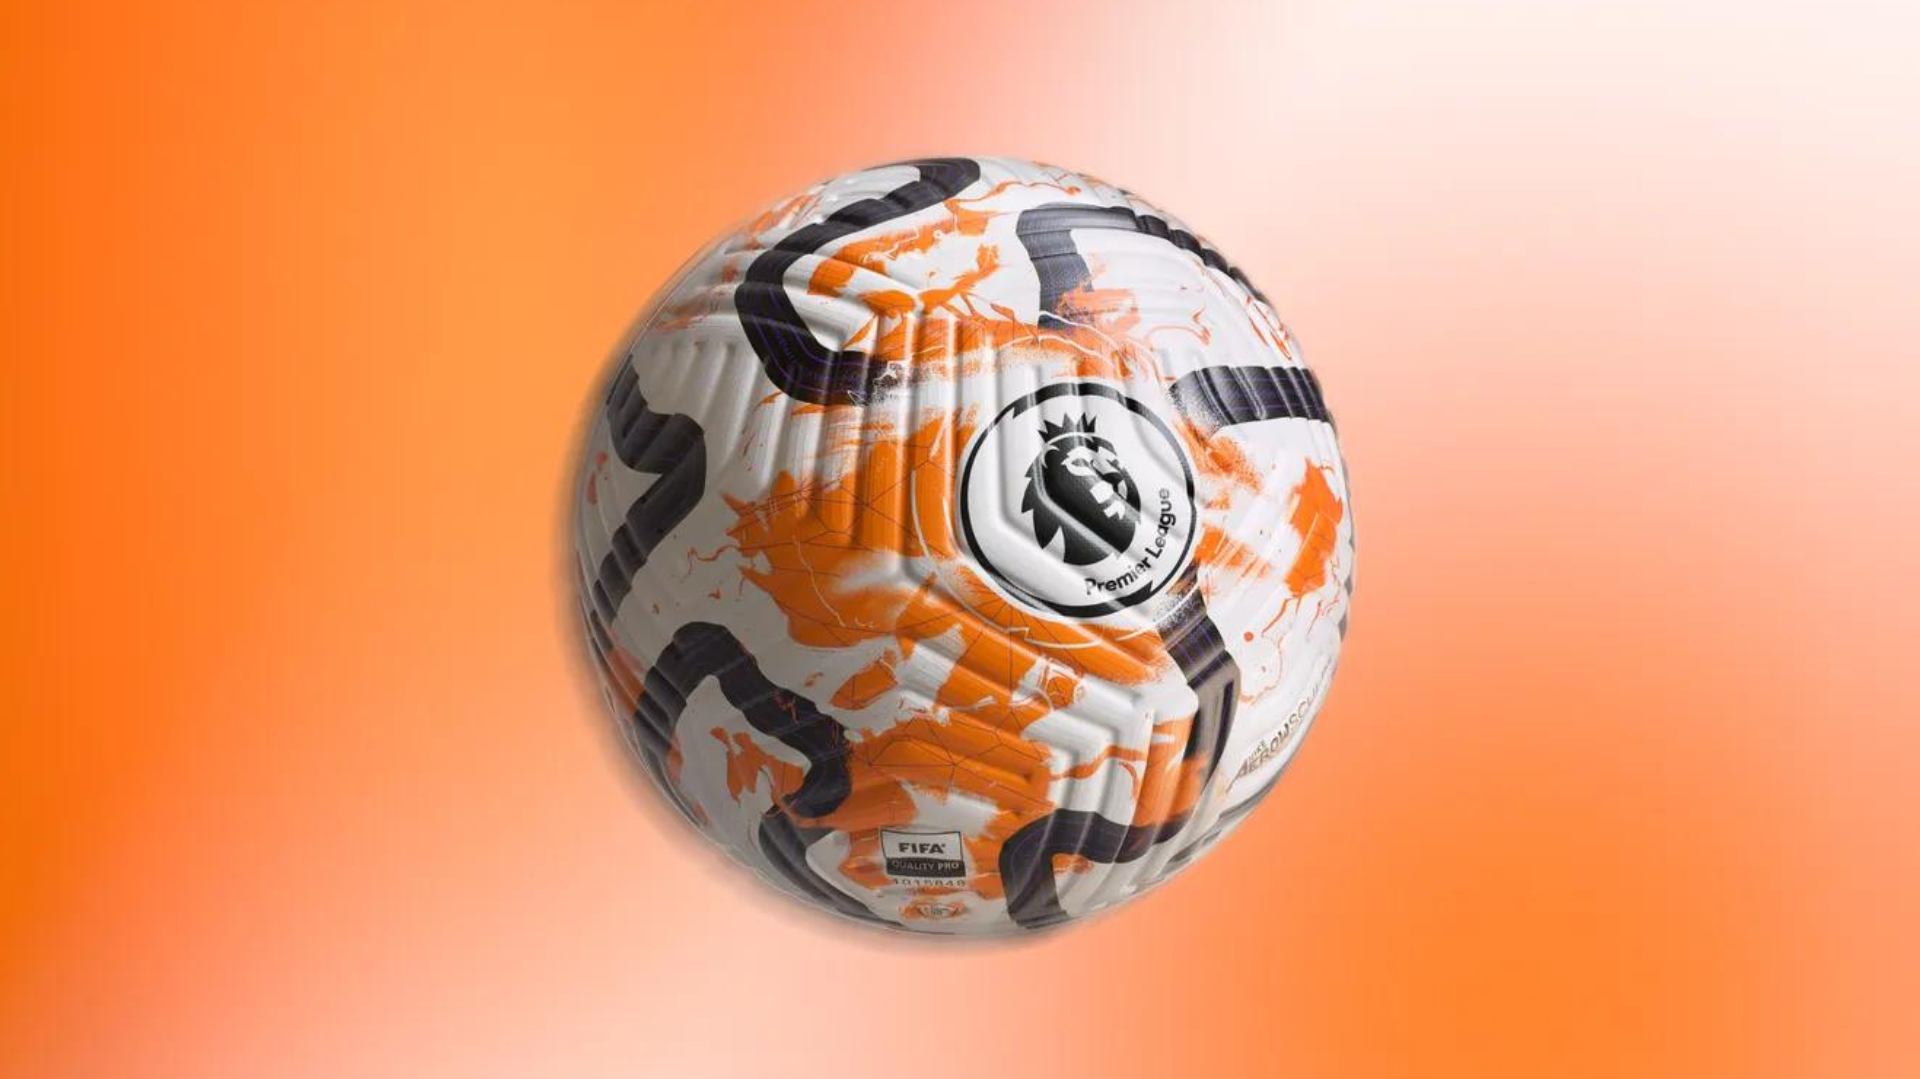 New Nike Flight Premier League Ball Released For Season